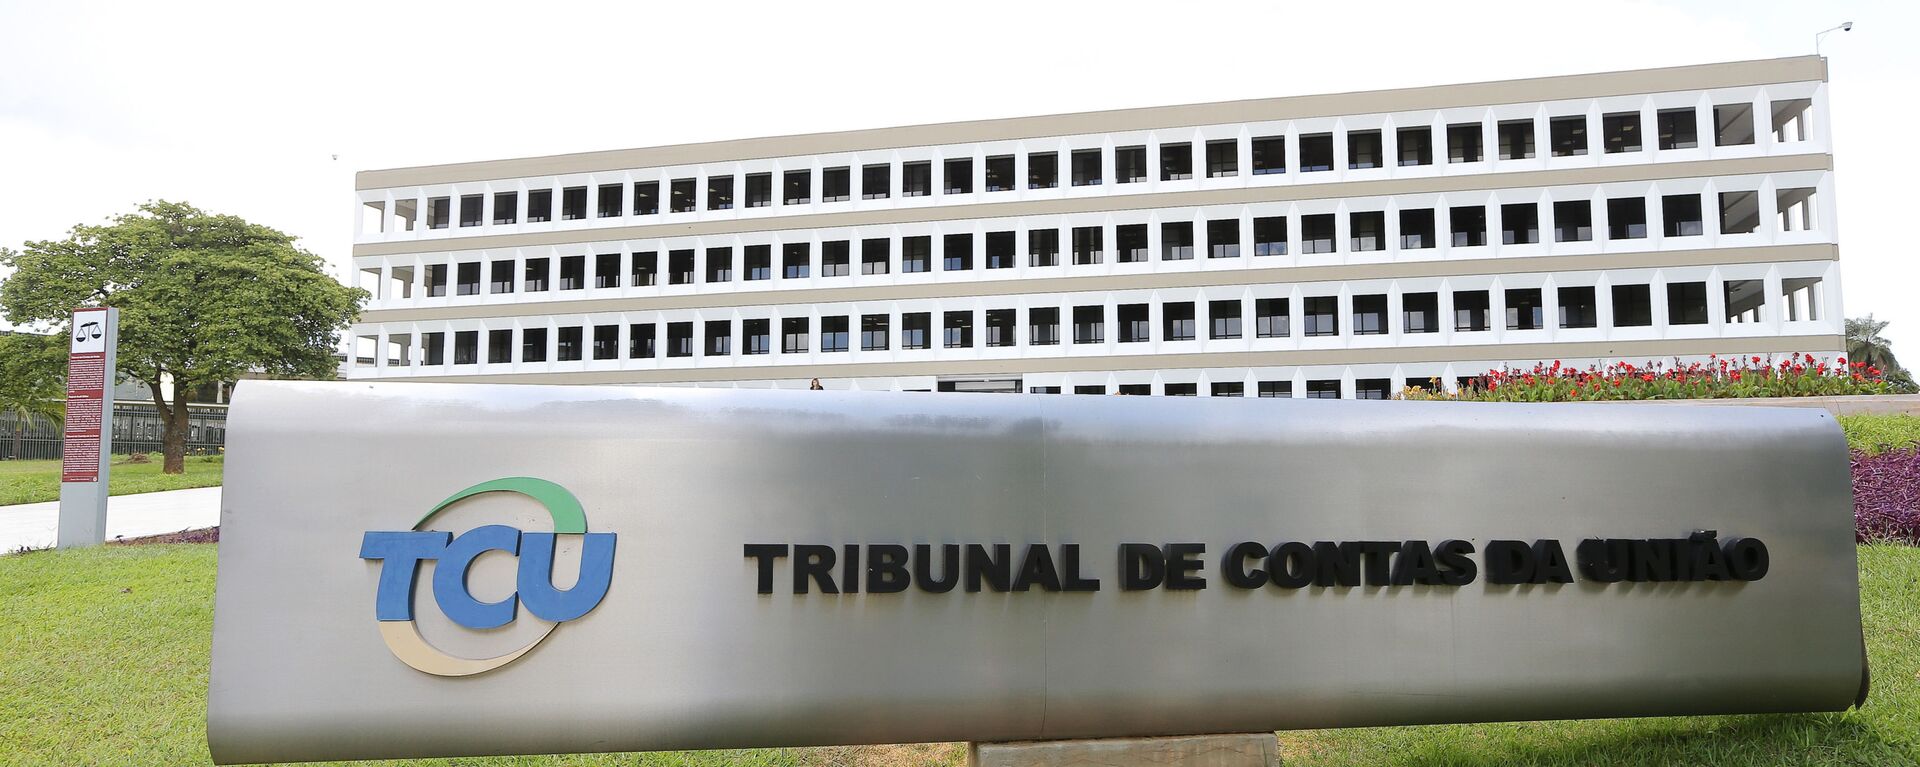  TCU (Tribunal de Contas da União) em Brasília - Sputnik Brasil, 1920, 29.10.2021